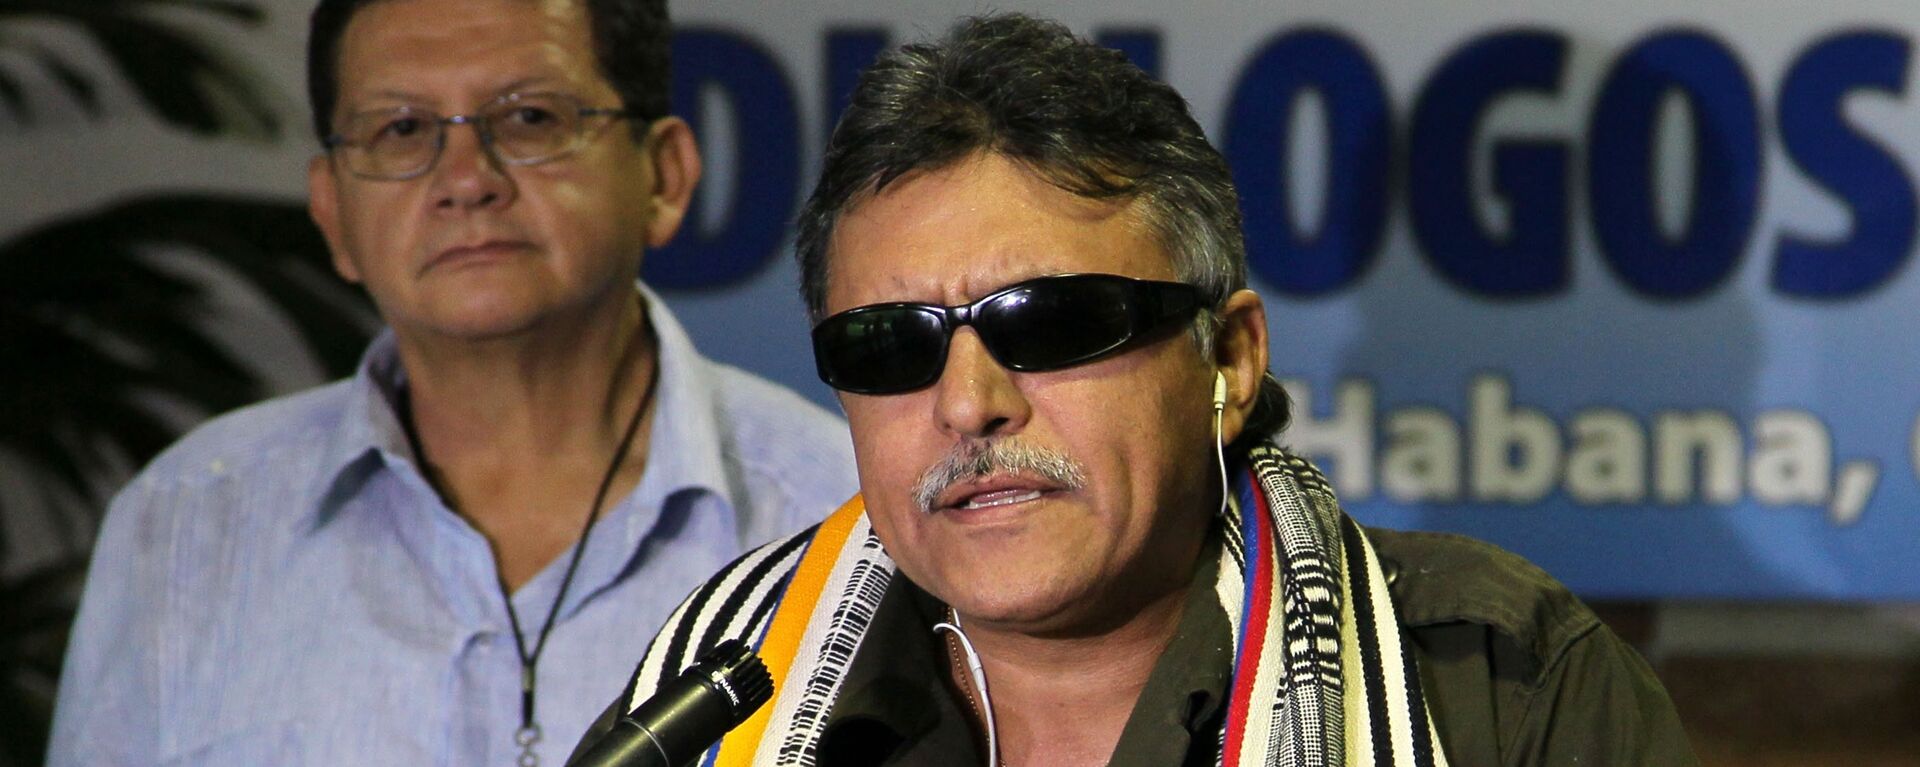 Jesús Santrich, exguerrillero colombiano, integrante del partido político FARC - Sputnik Mundo, 1920, 19.05.2021